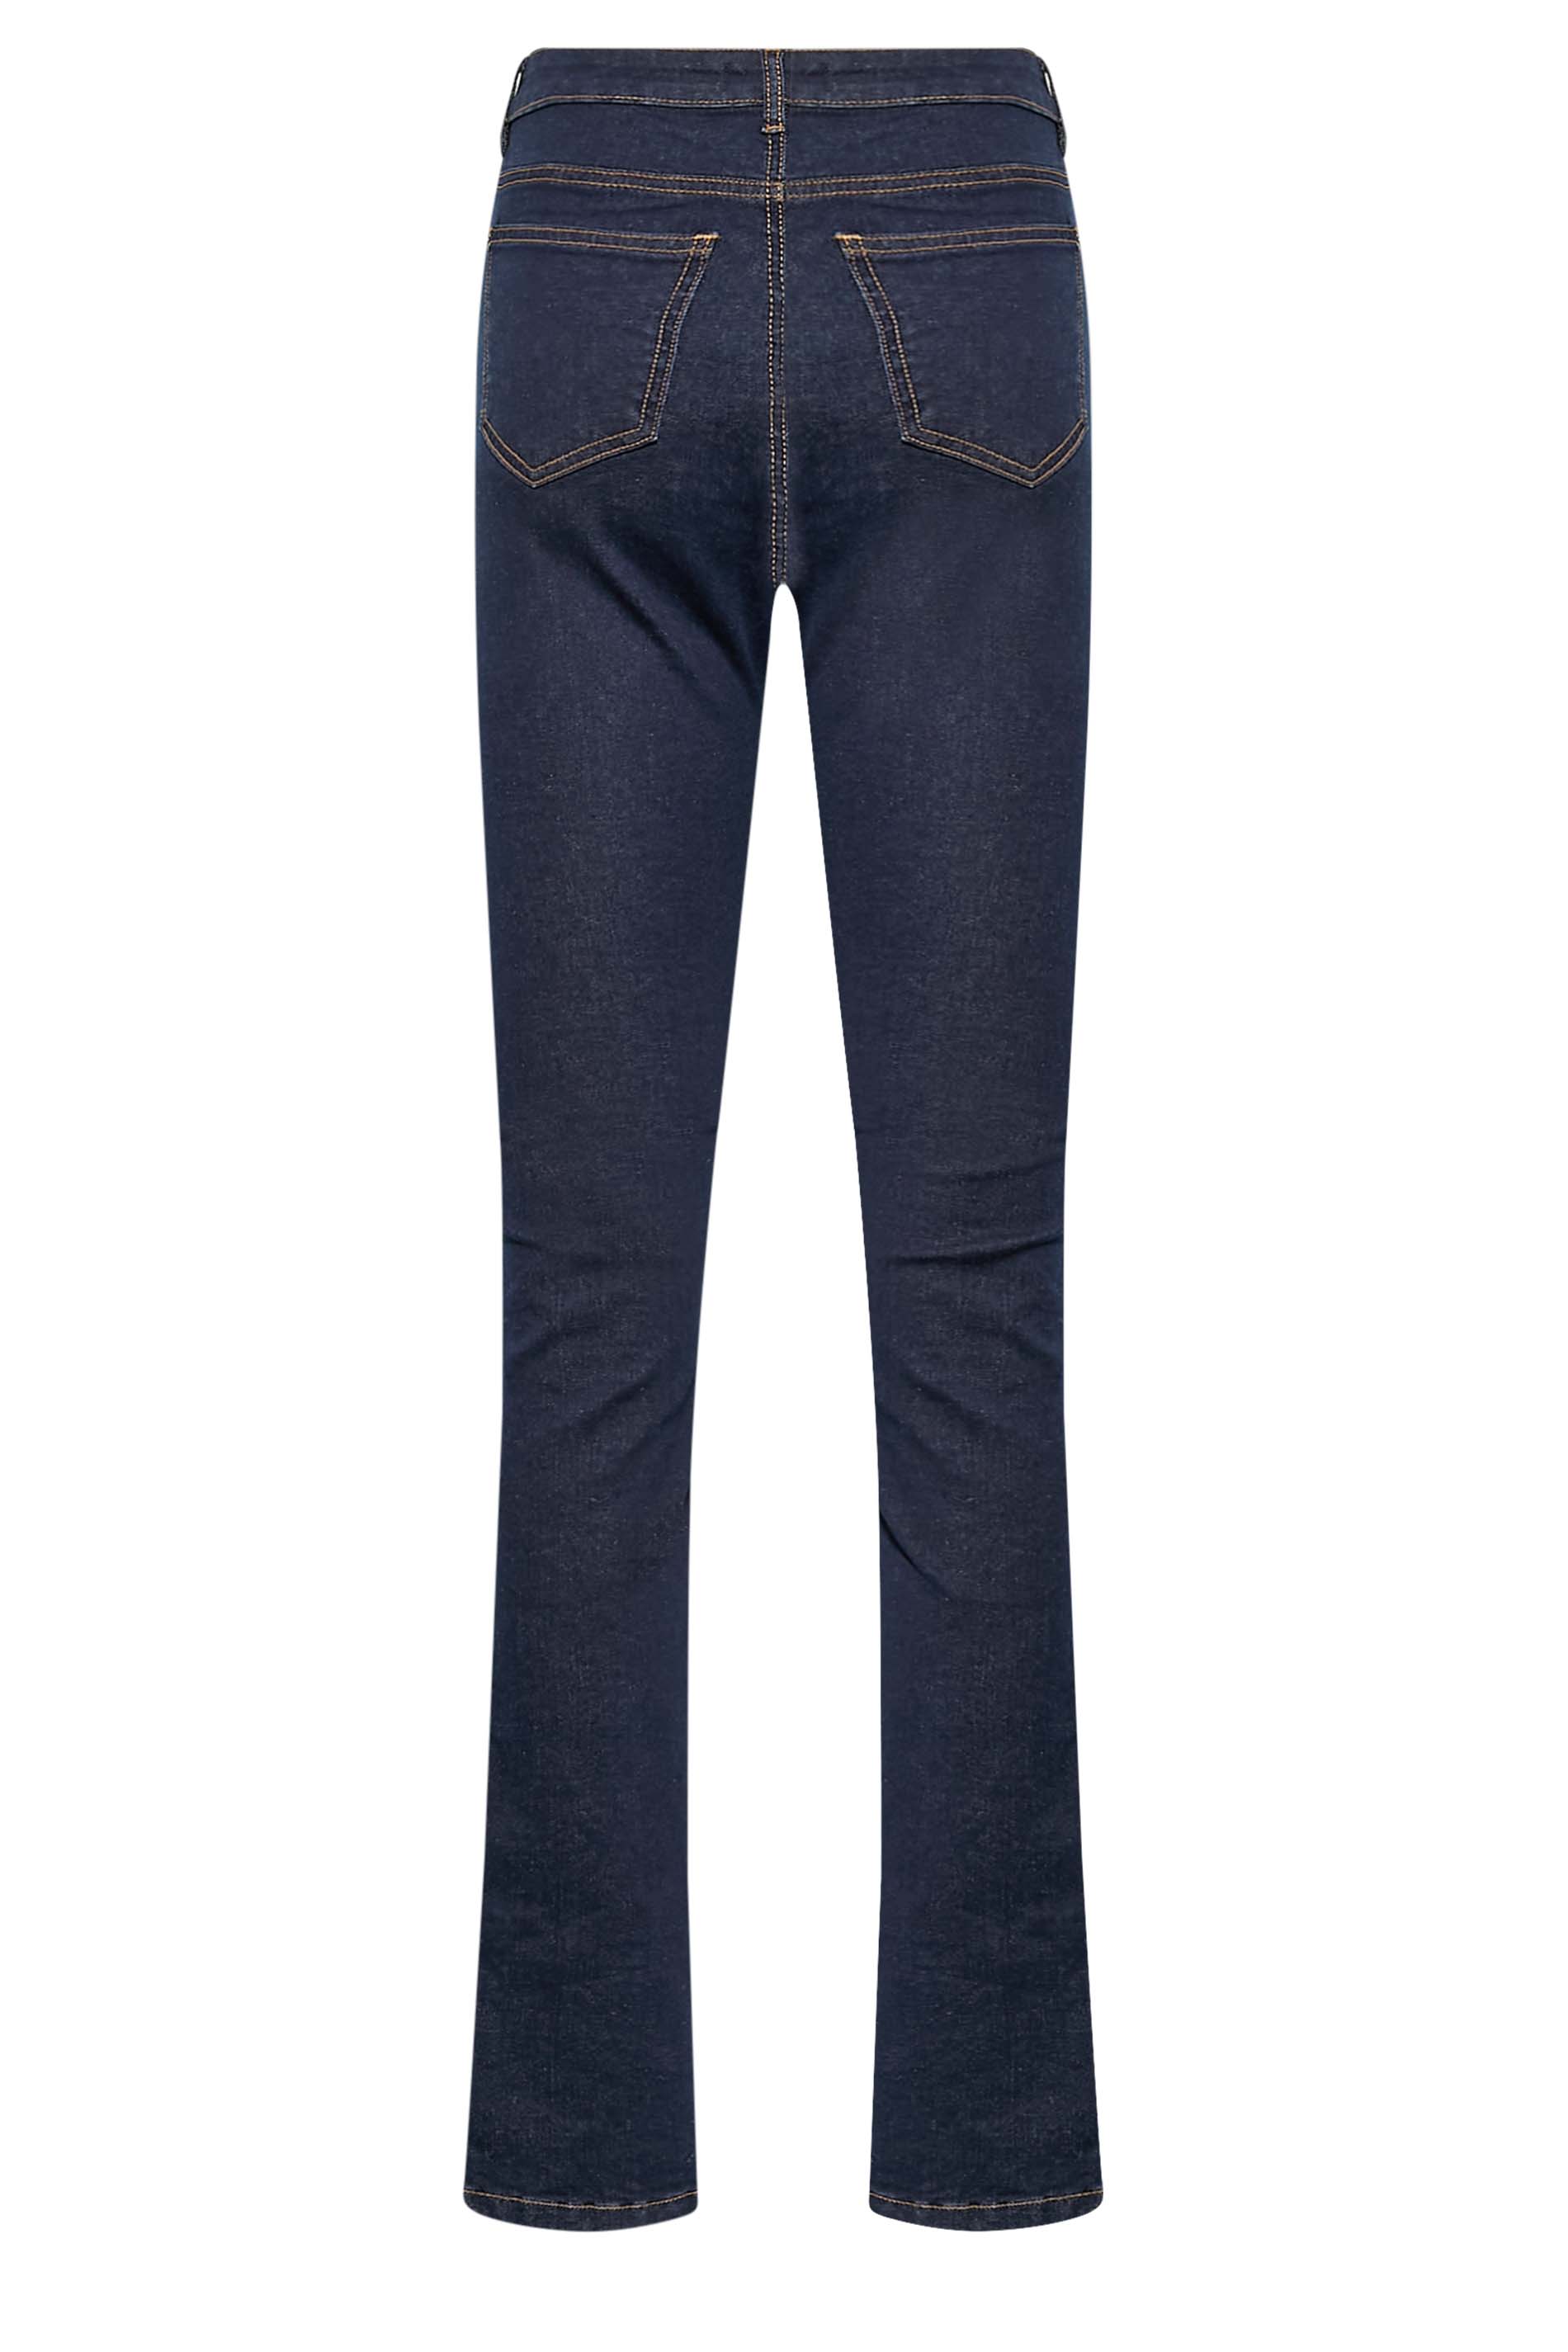 LTS Tall Women's Indigo Blue MIA Slim Leg Jeans | Long Tall Sally 3